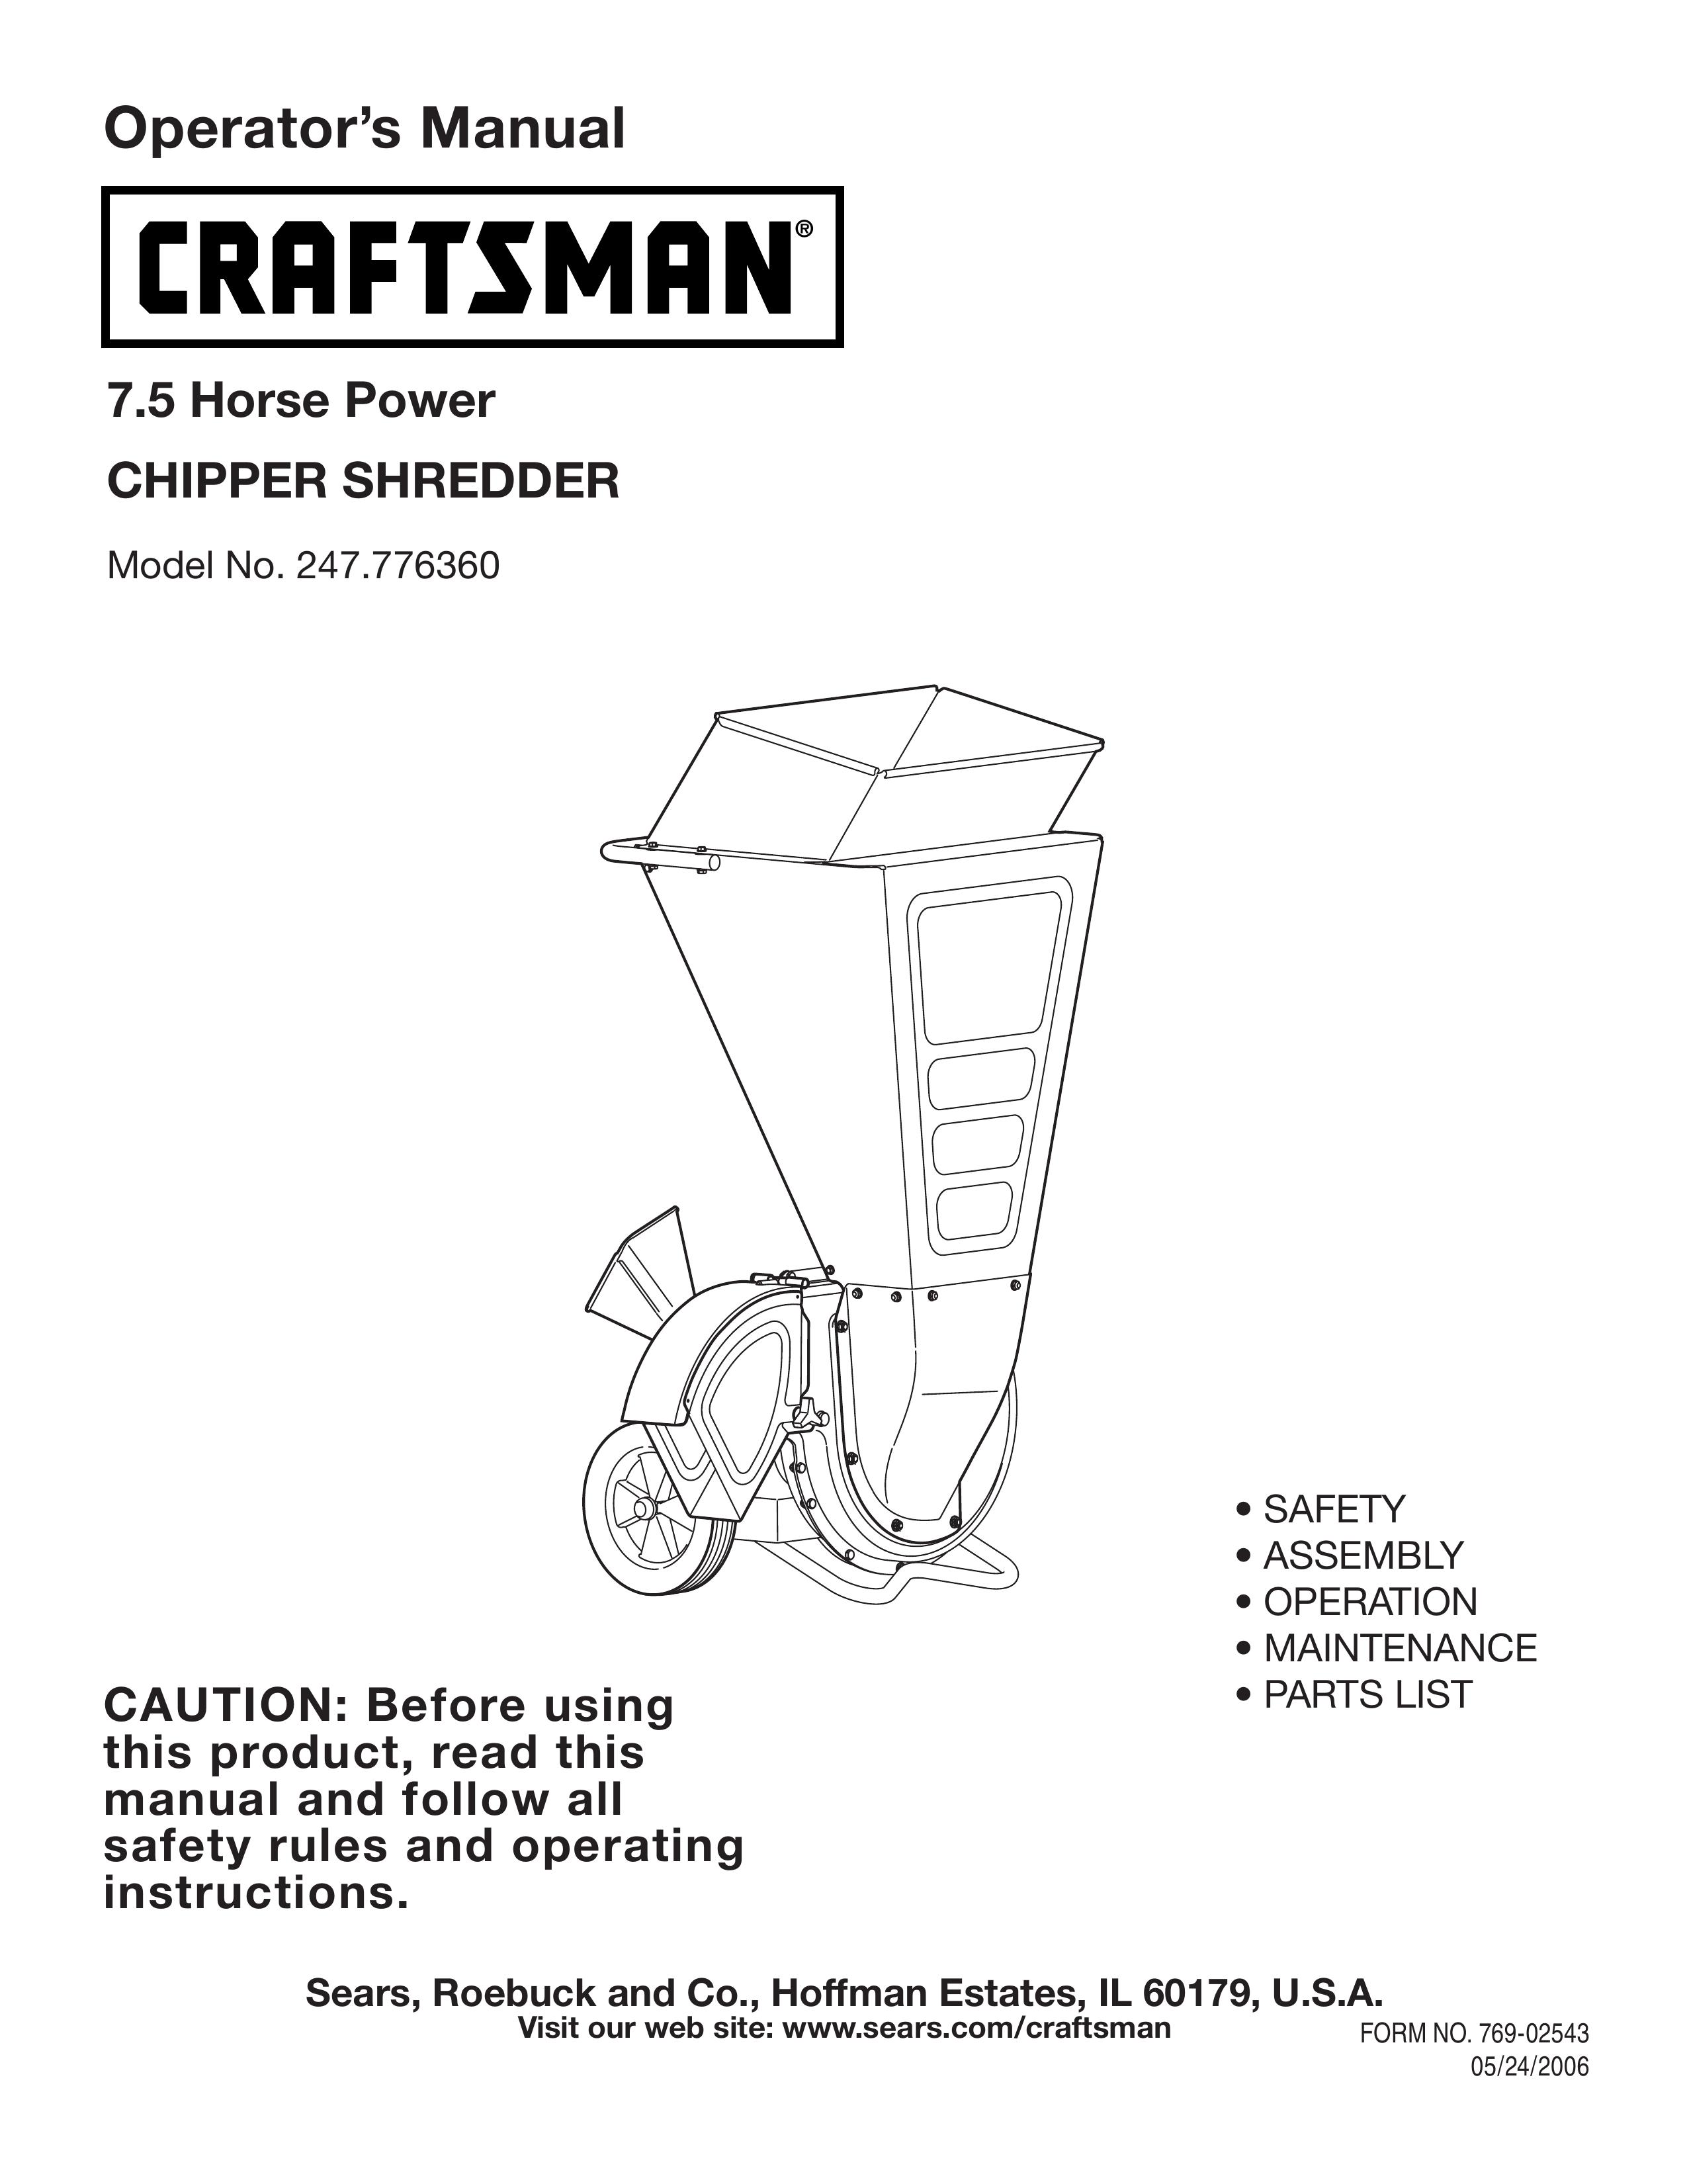 Craftsman 247.77636 Chipper User Manual